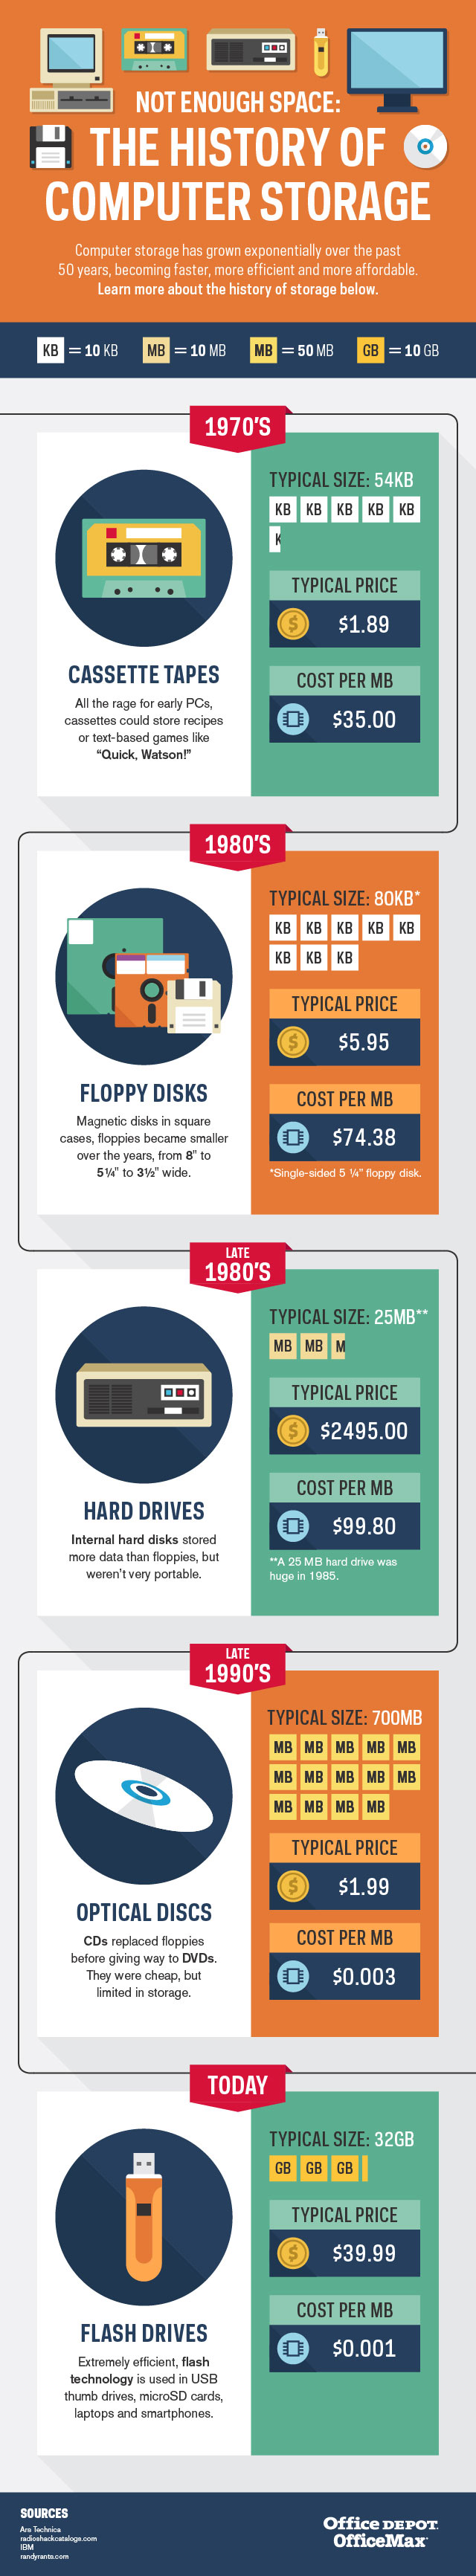 history of computer storage